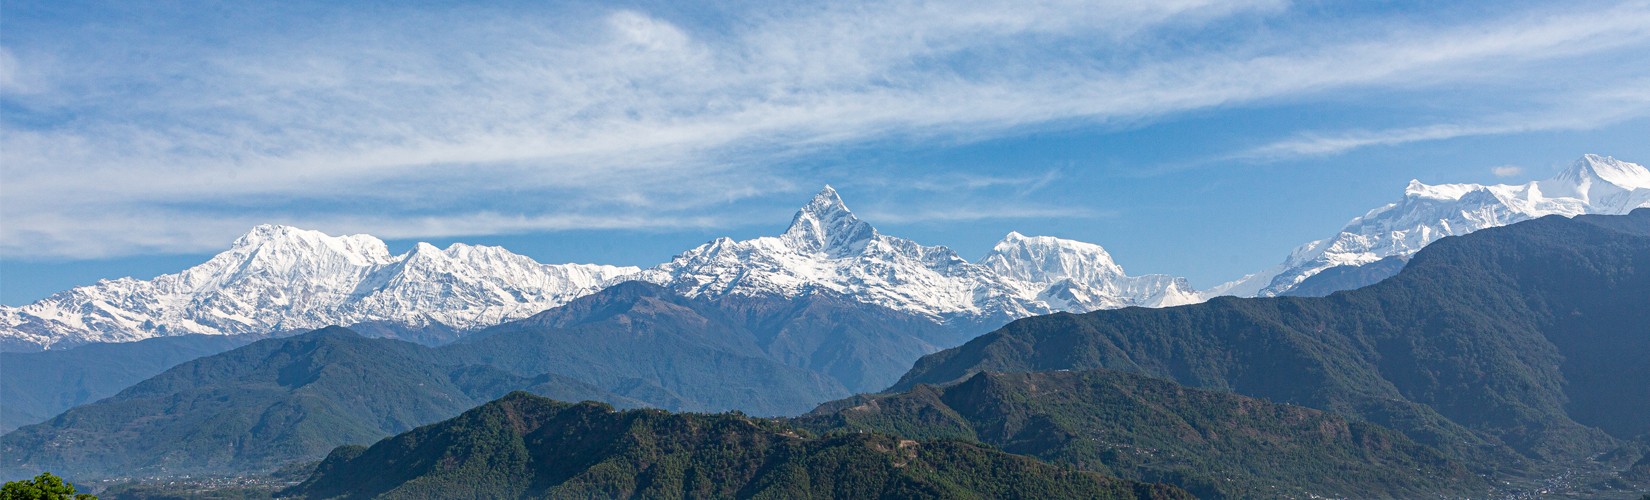 Annapurna Himalayan Range